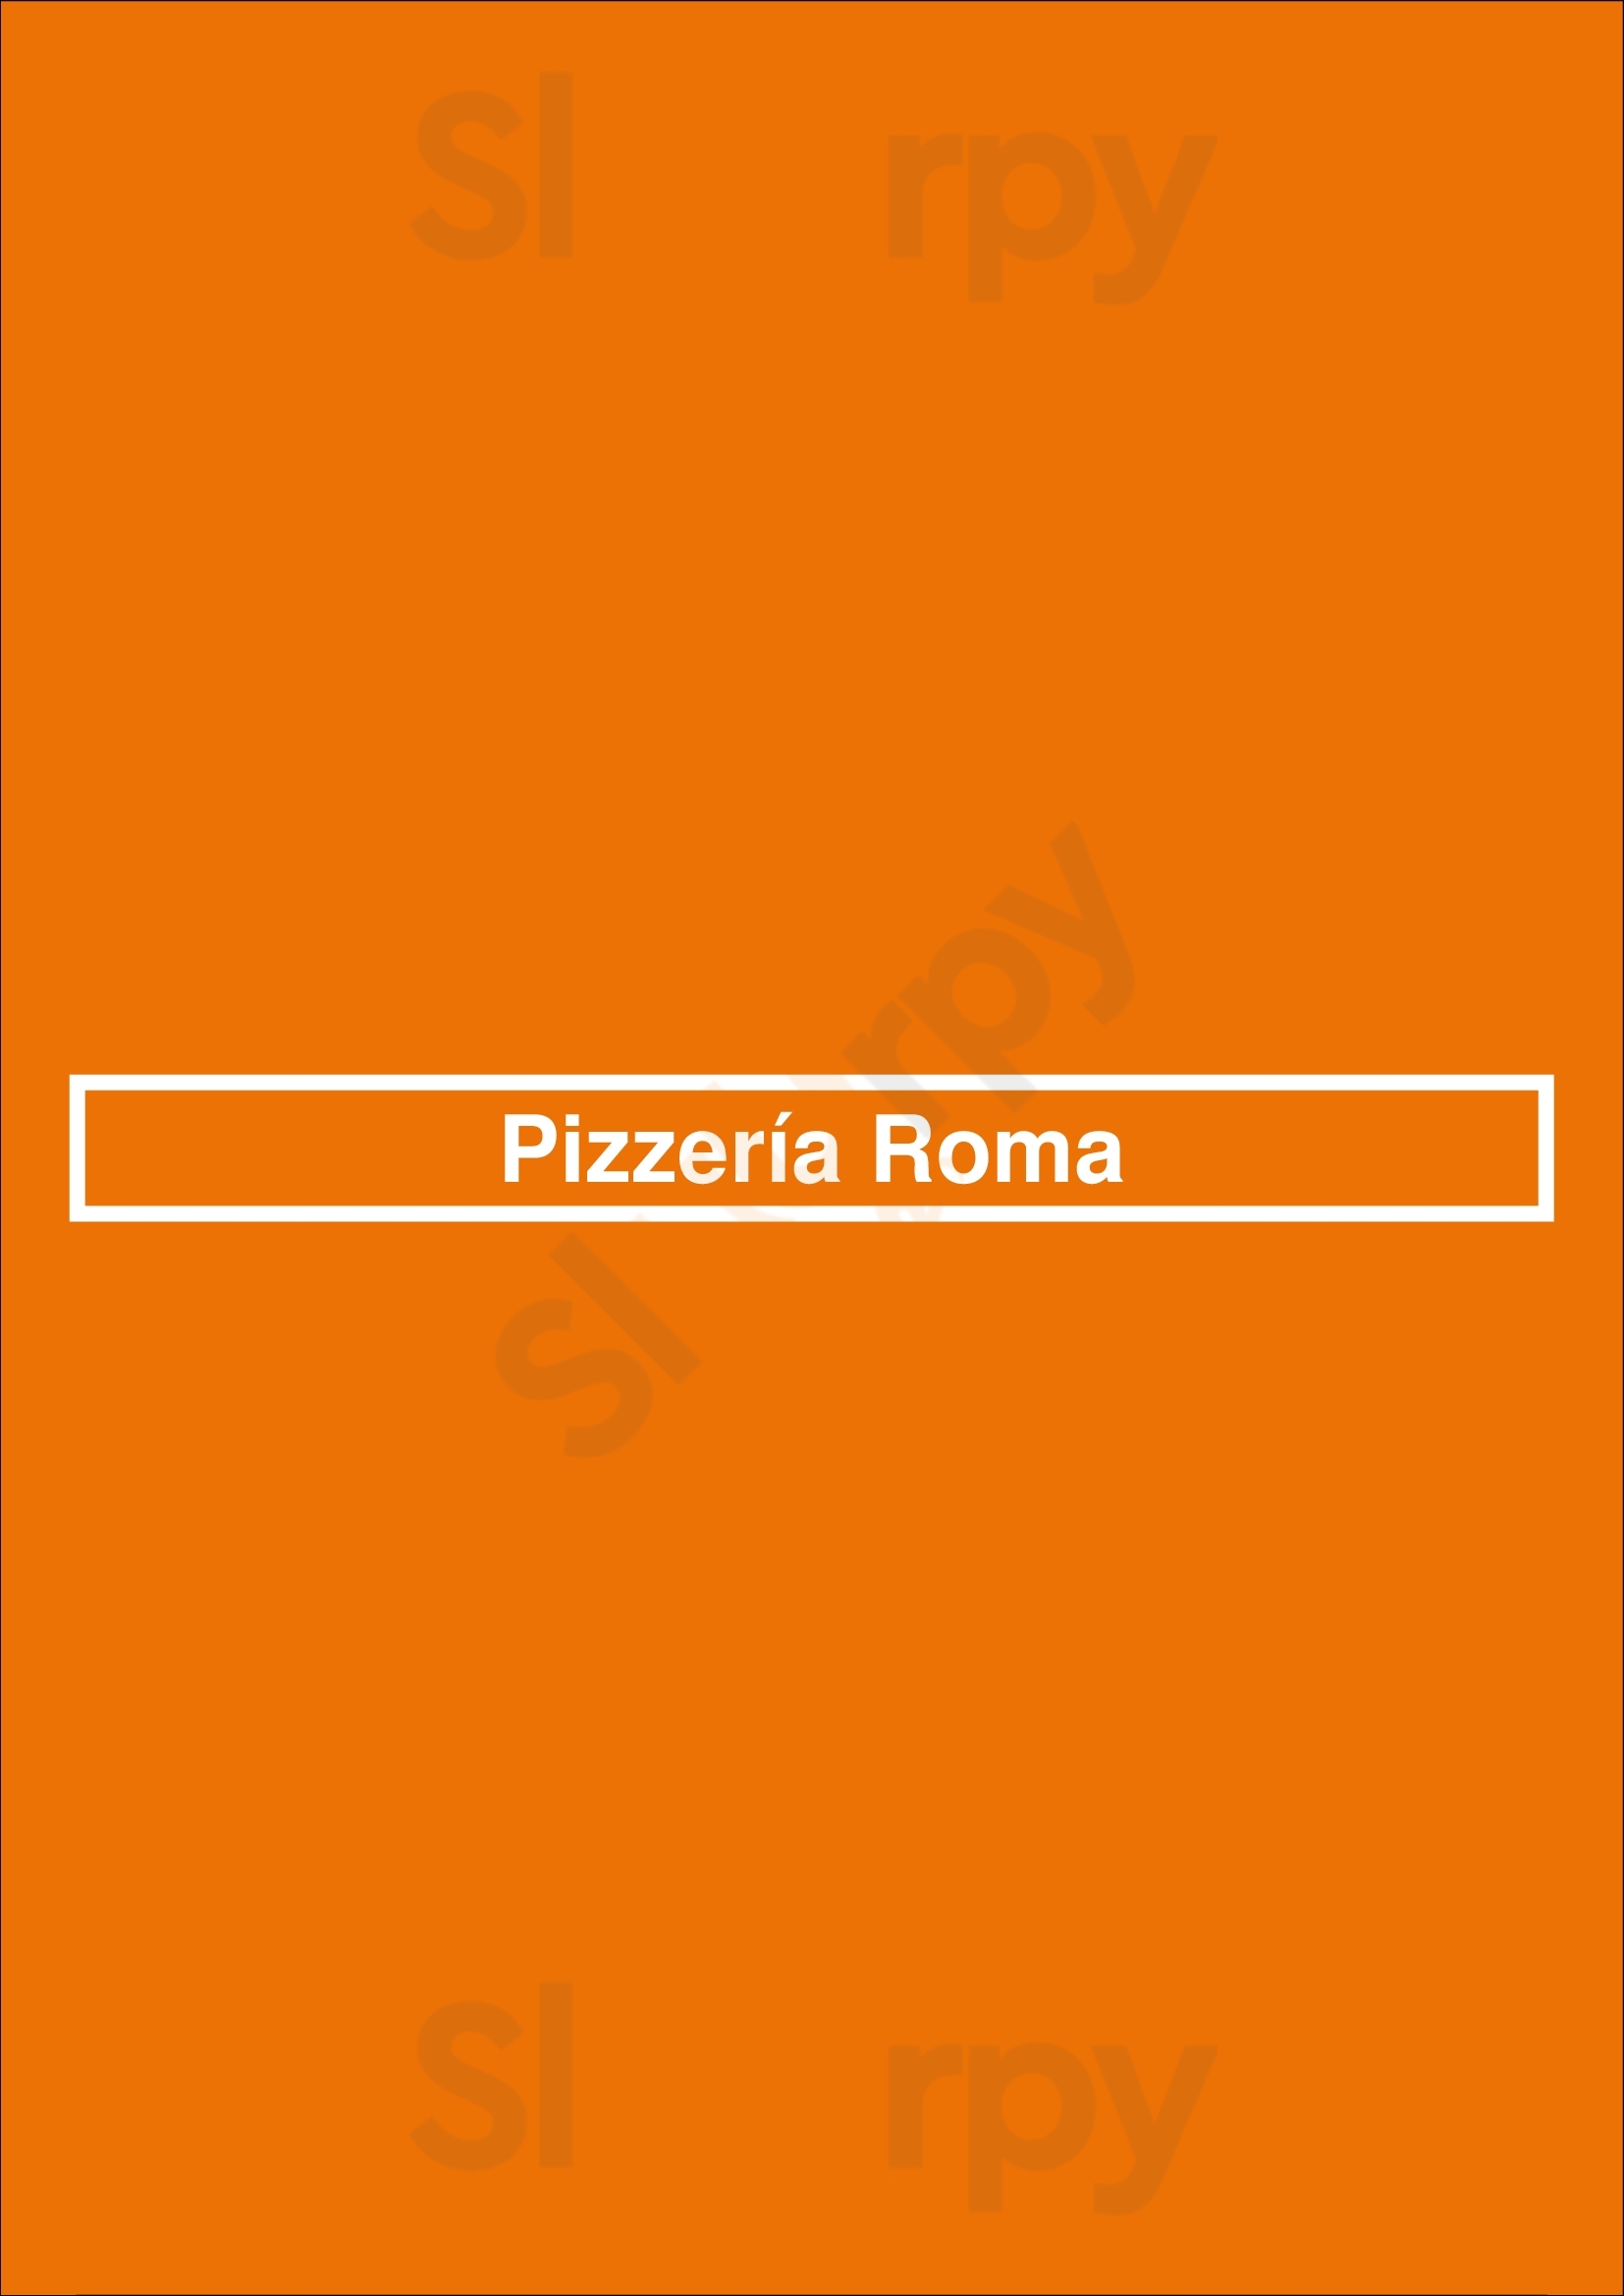 Pizzería Roma Ciudadela Menu - 1